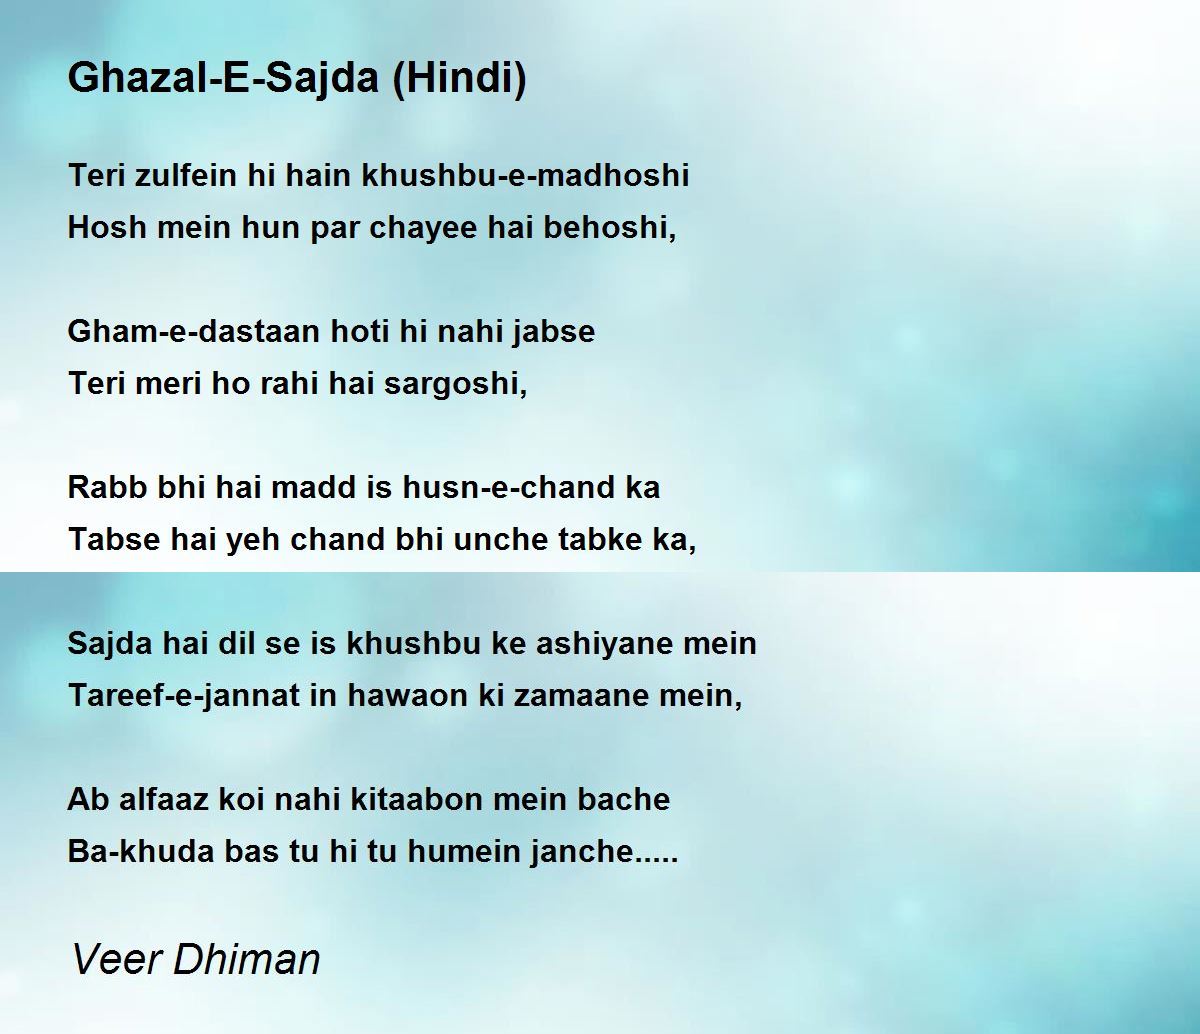 Ghazal-E-Sajda (Hindi) - Ghazal-E-Sajda (Hindi) Poem by Veer Dhiman